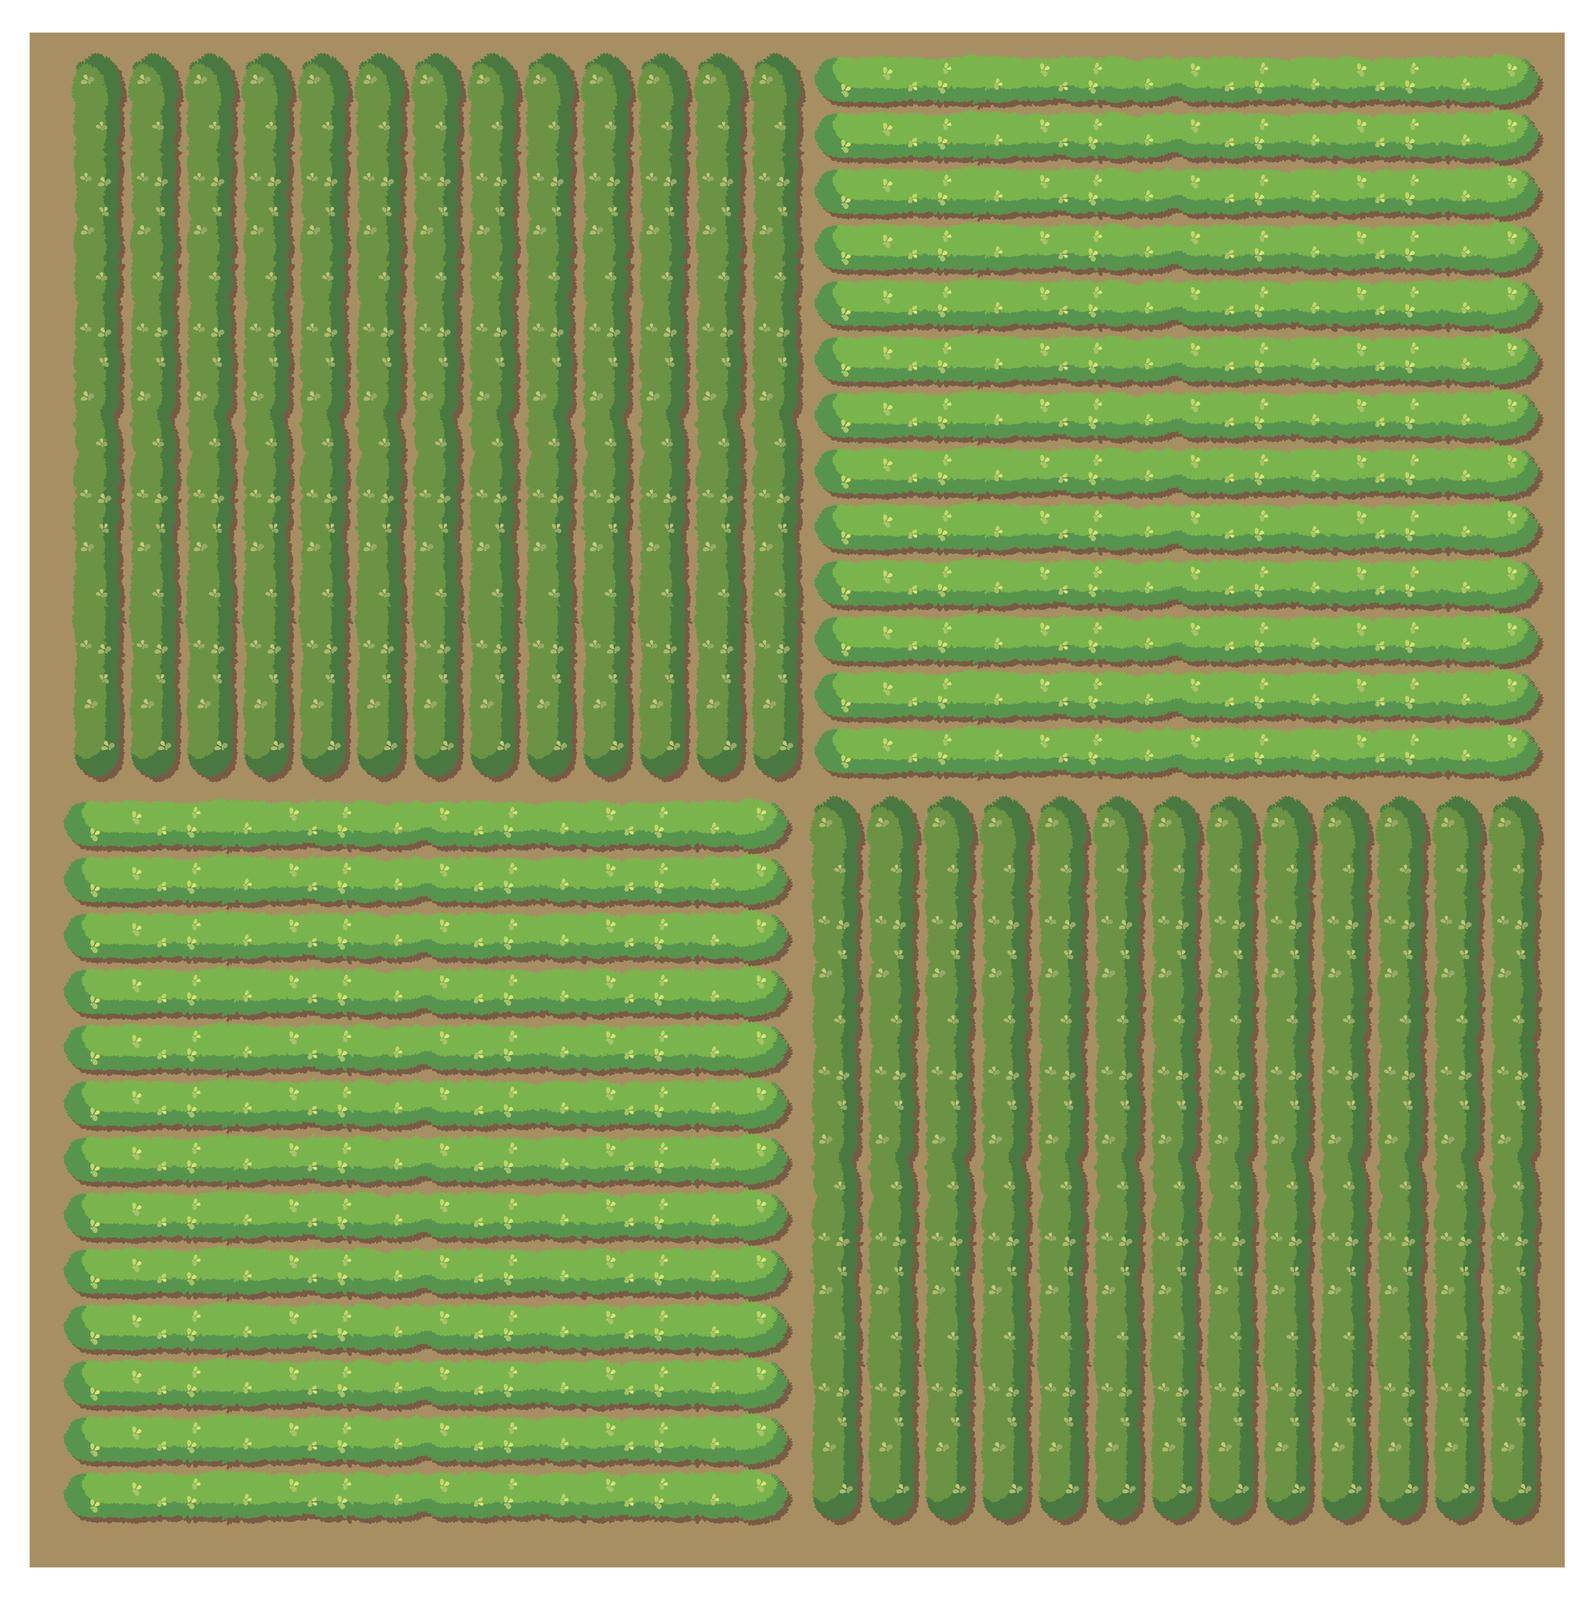 Simple pattern of crop illustration